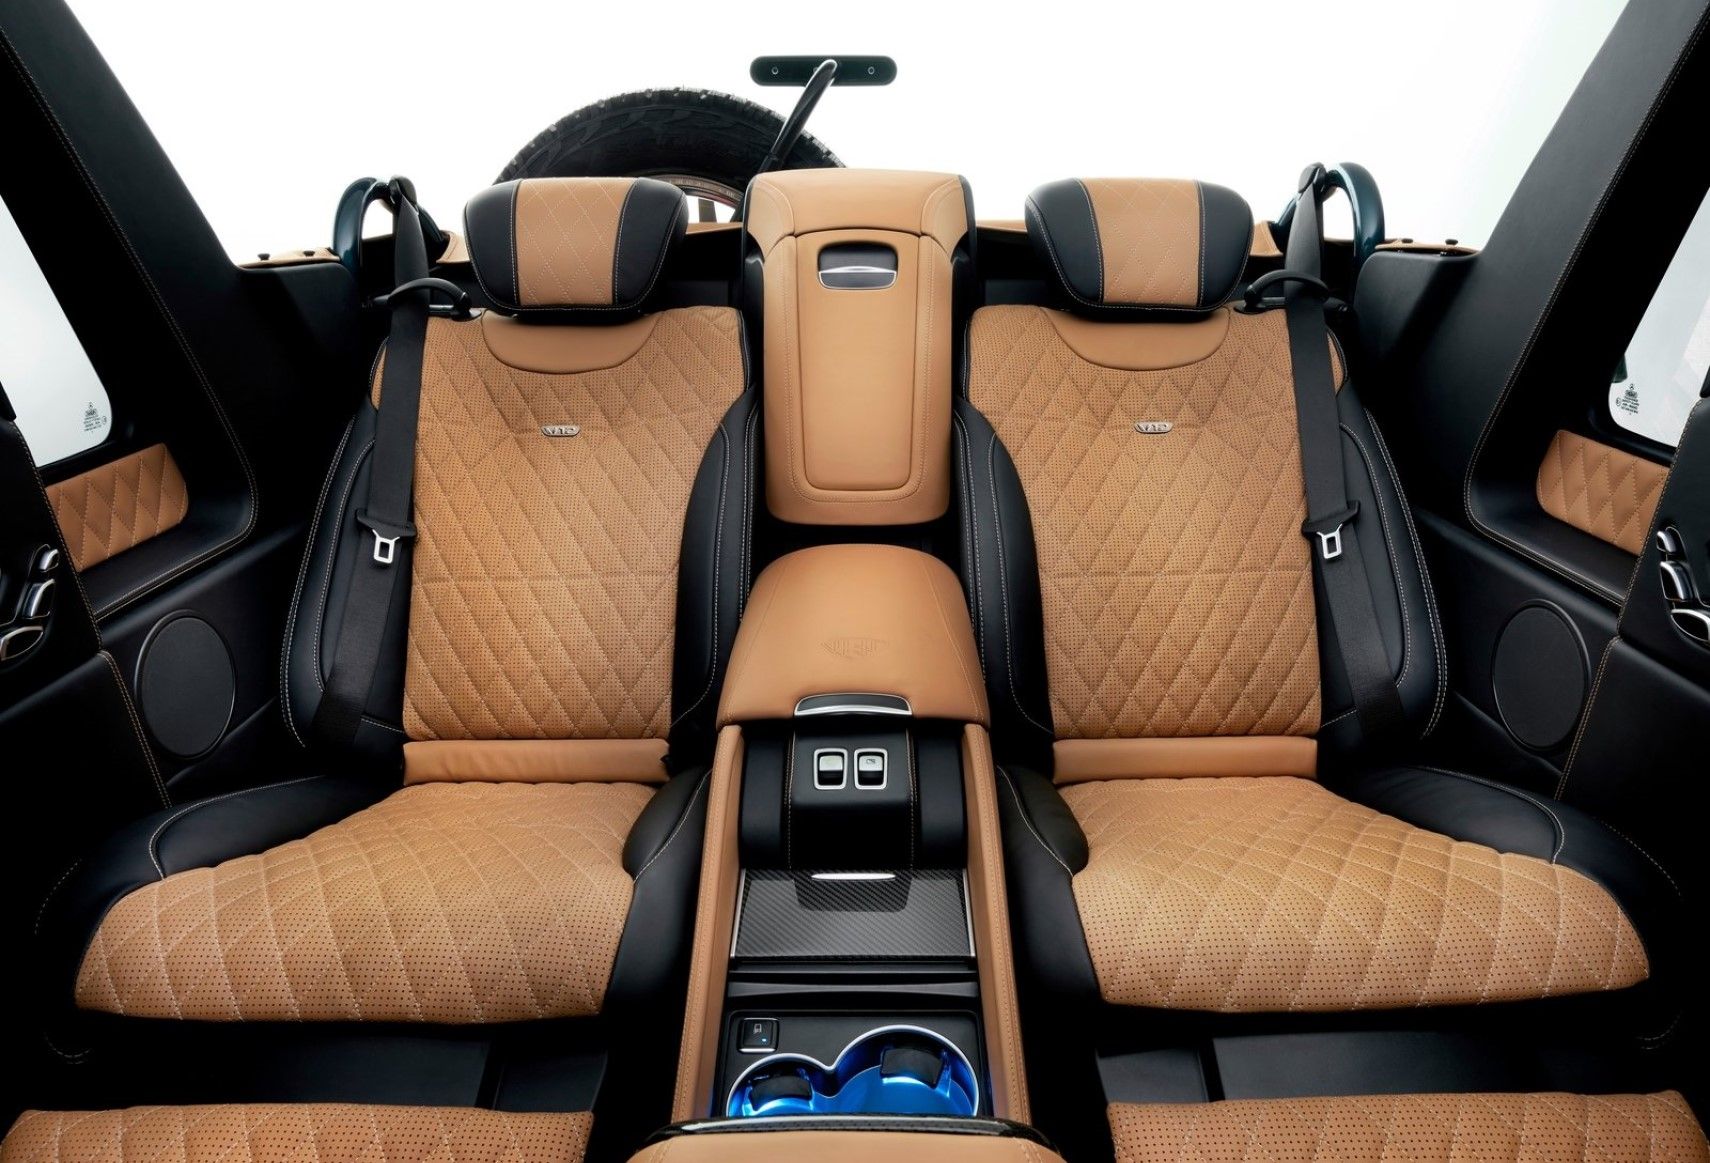 Mercedes Maybach G650 Landaulet second row seats view